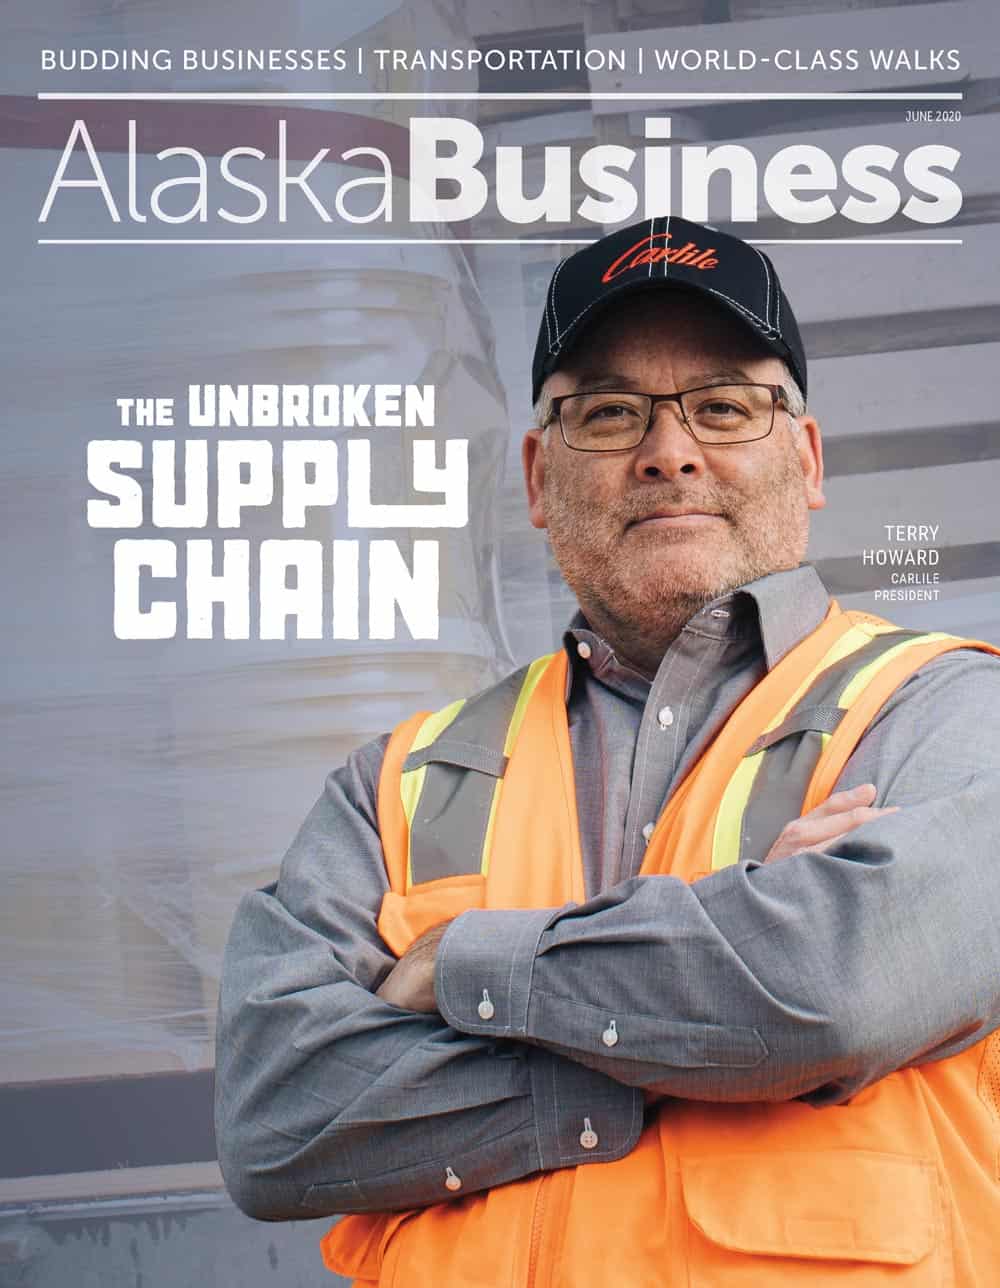 Alaska Business Magazine June 2020 cover